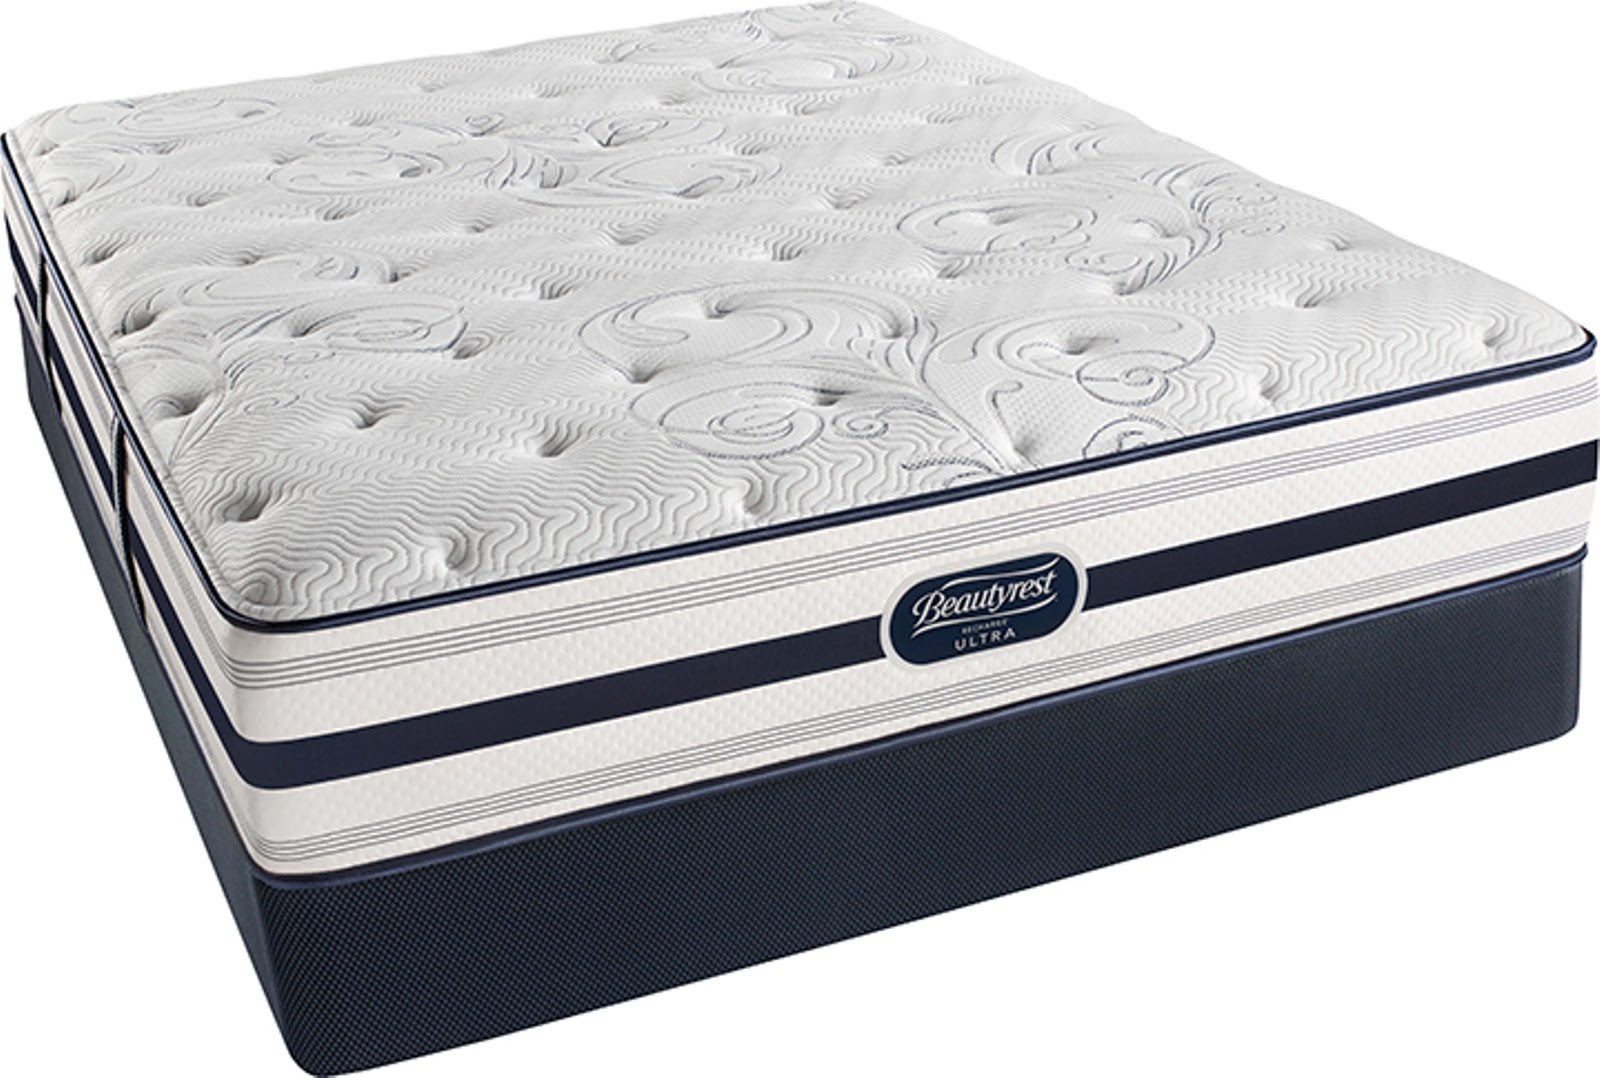 beautyrest recharge hybrid wynona queen mattress review